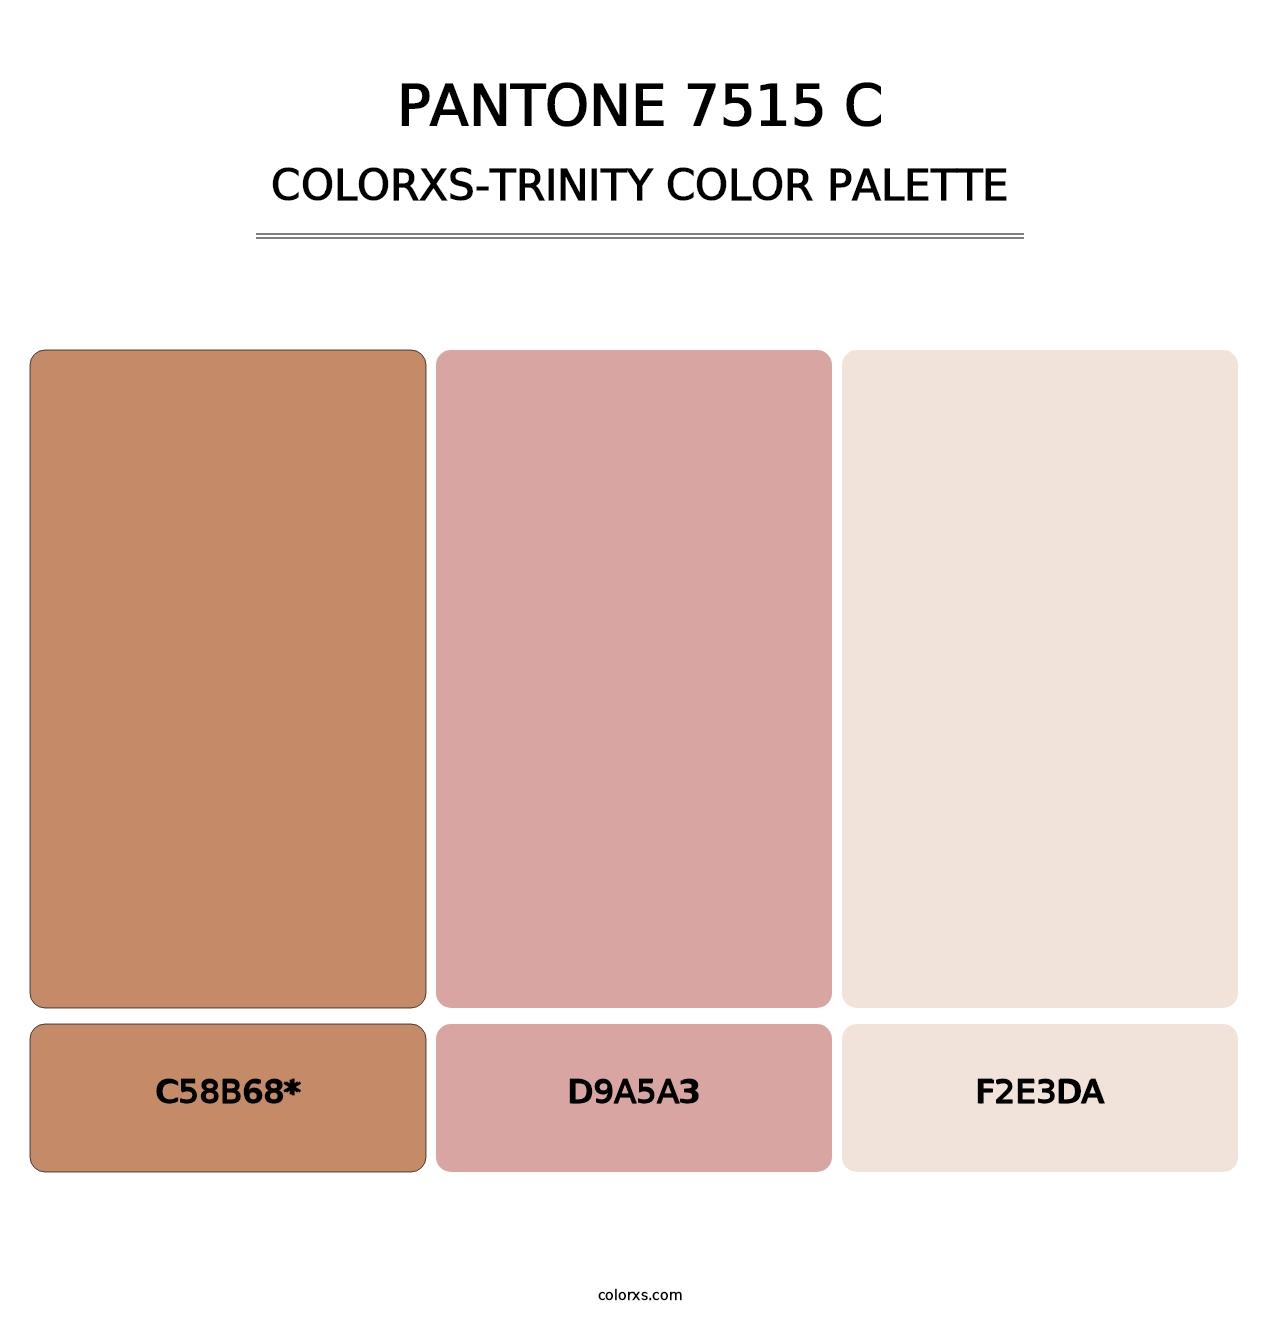 PANTONE 7515 C - Colorxs Trinity Palette